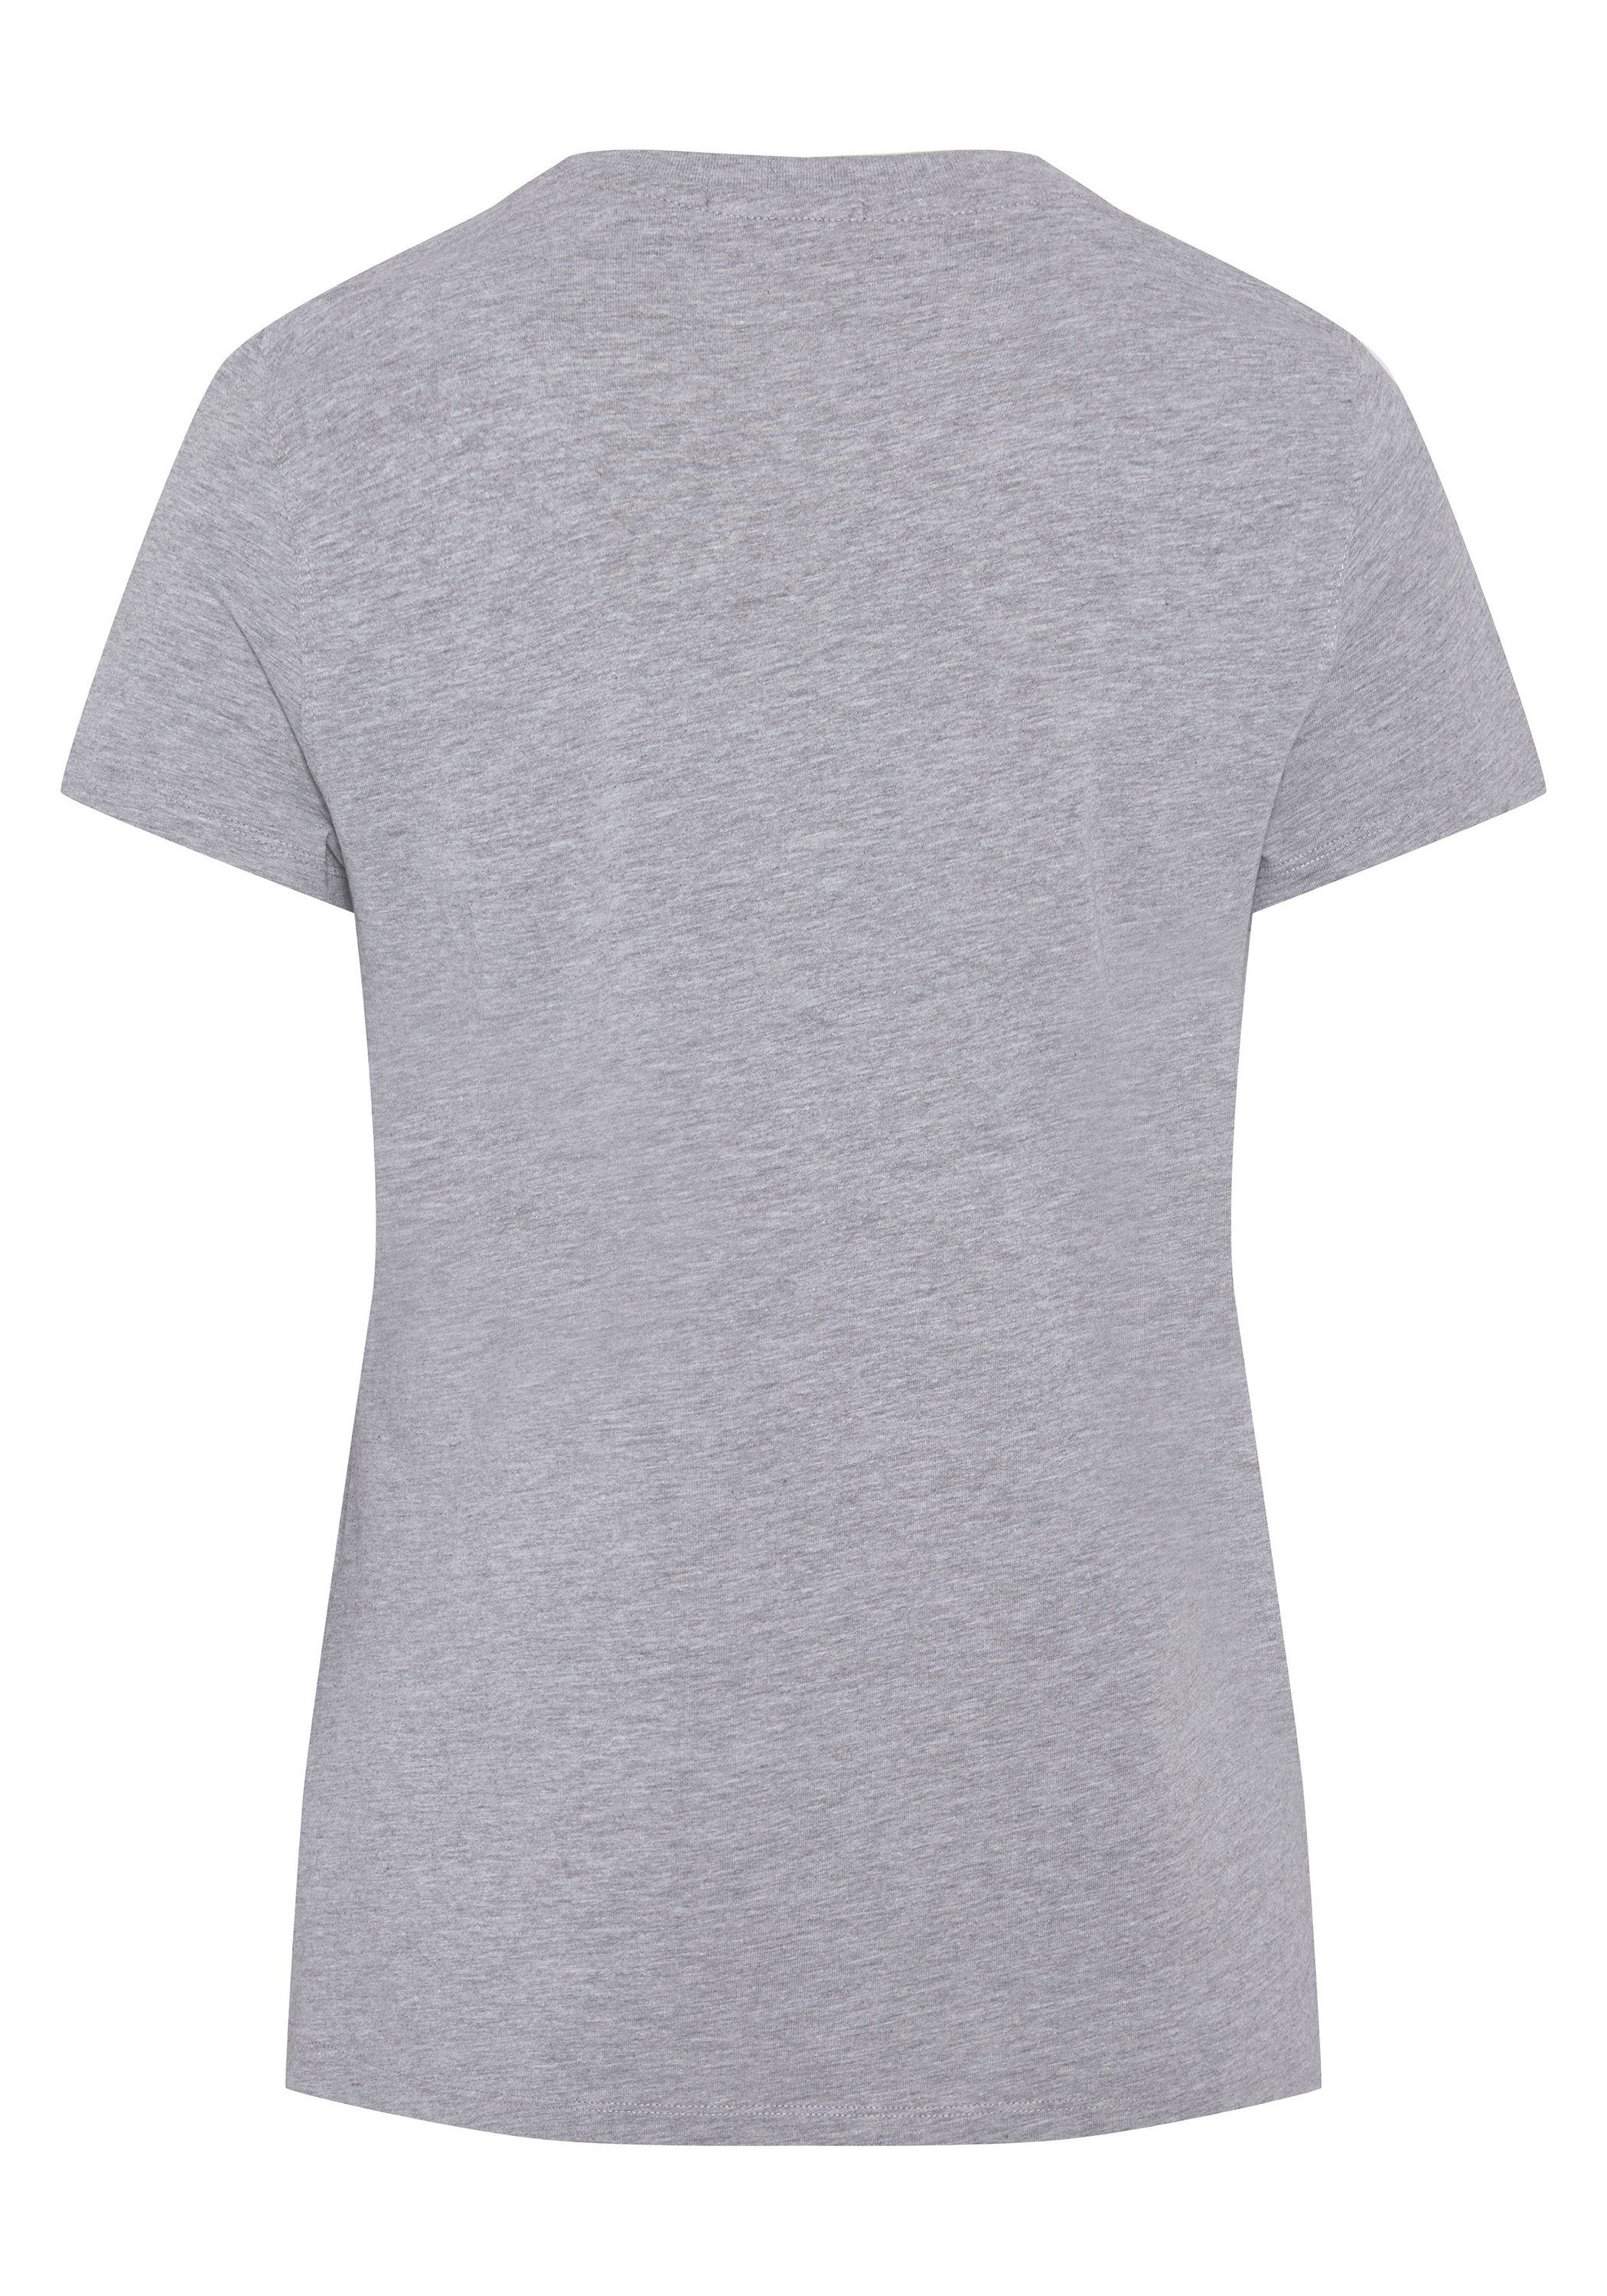 Chiemsee Gray 1 Schriftzug Print-Shirt Neutral T-Shirt mit Melange 17-4402M